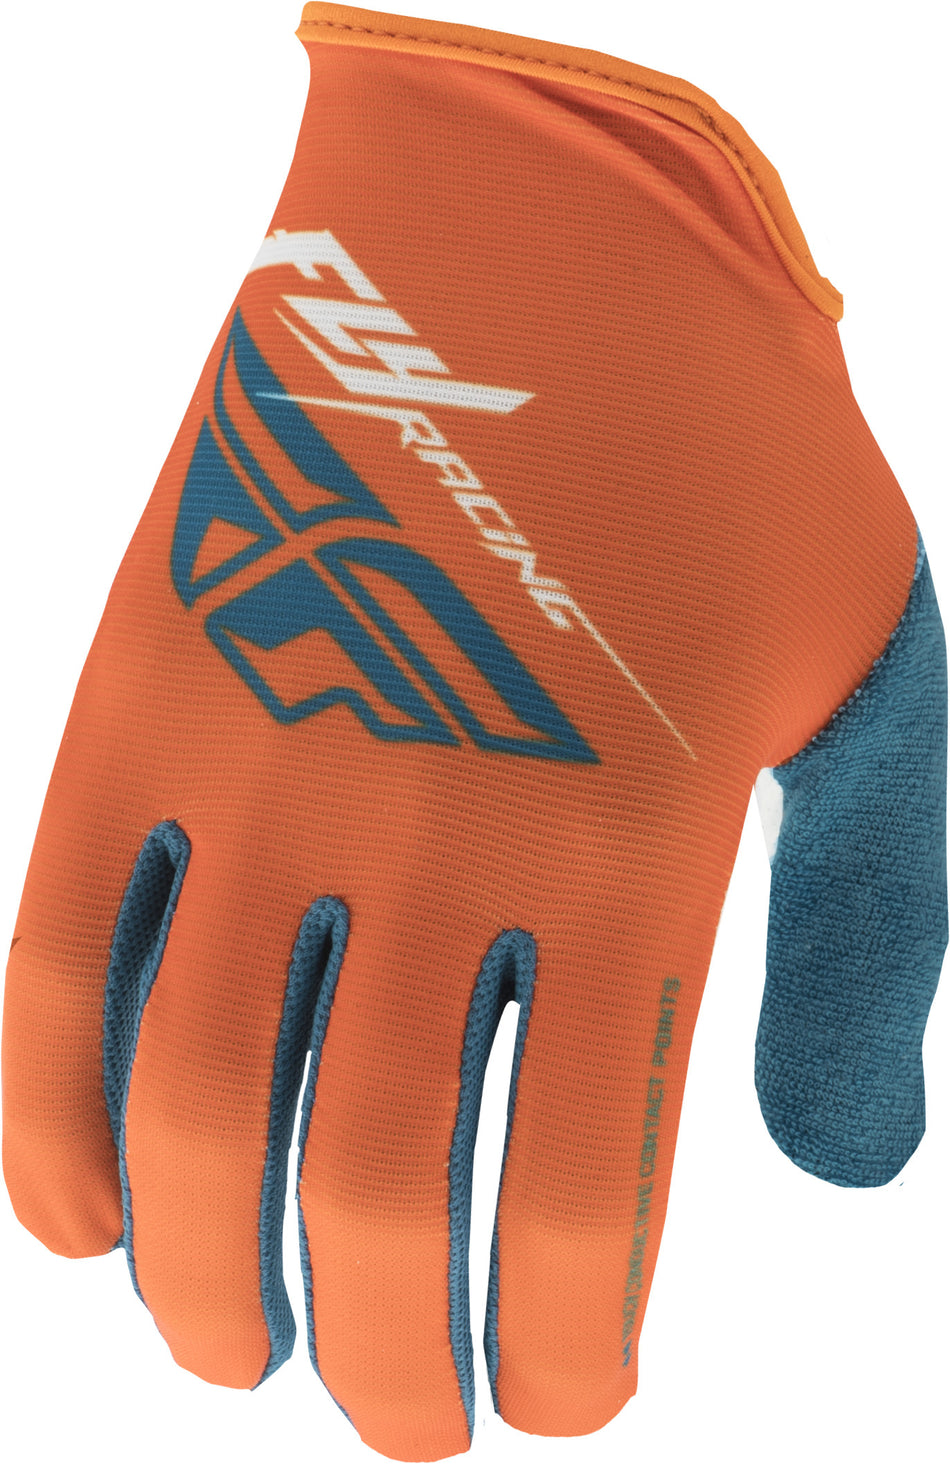 FLY RACING Media Gloves Orange/Teal/White Sz 08 350-09808